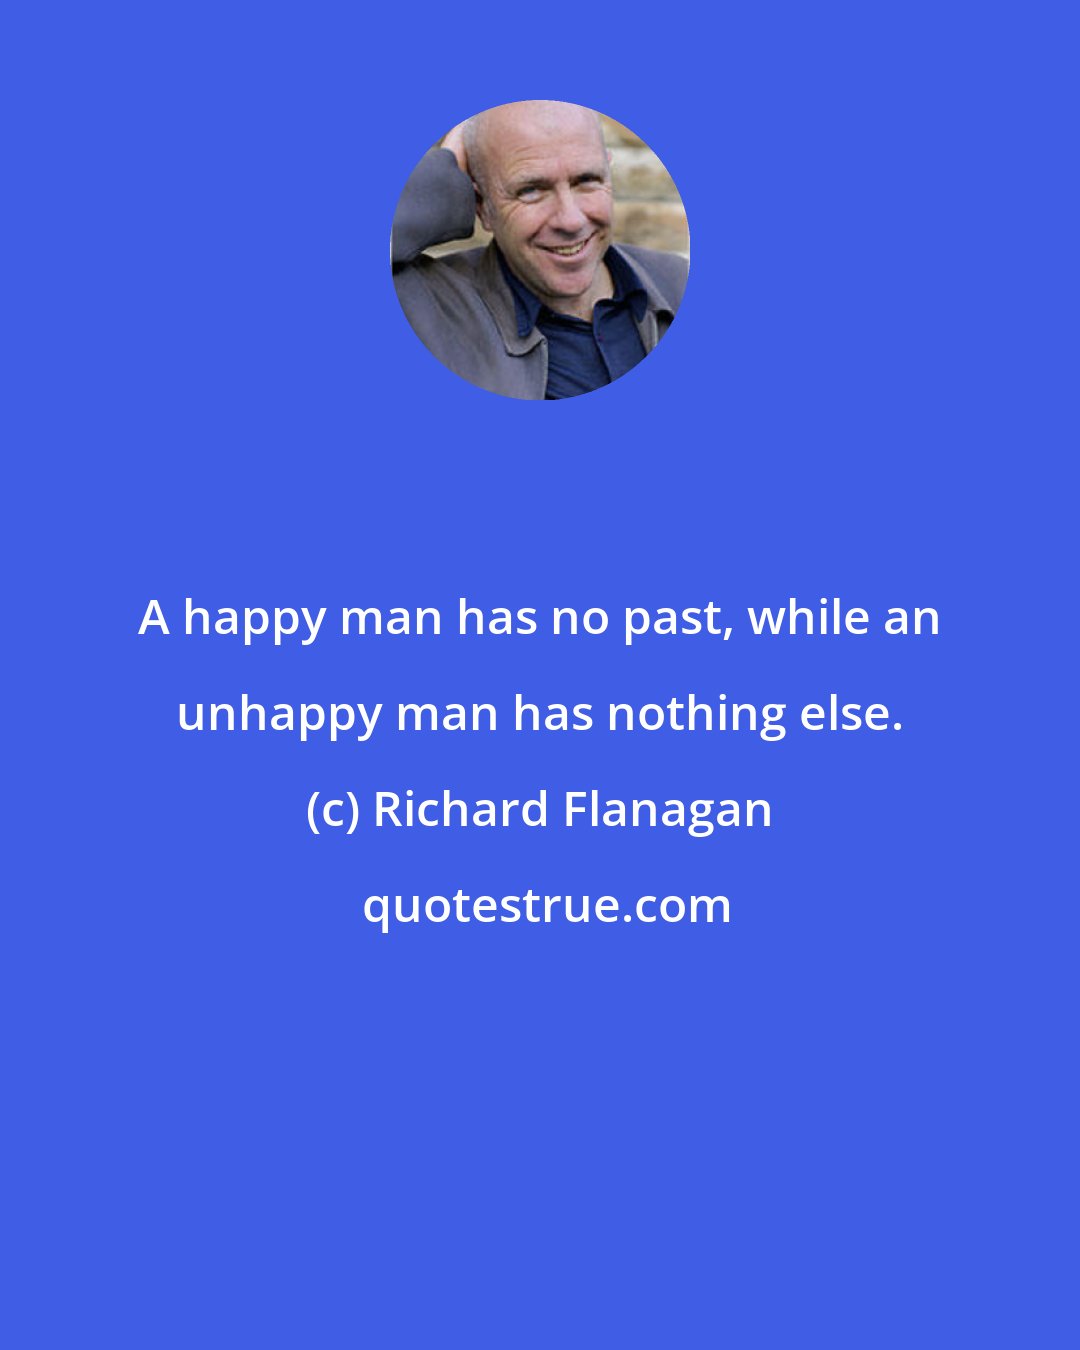 Richard Flanagan: A happy man has no past, while an unhappy man has nothing else.